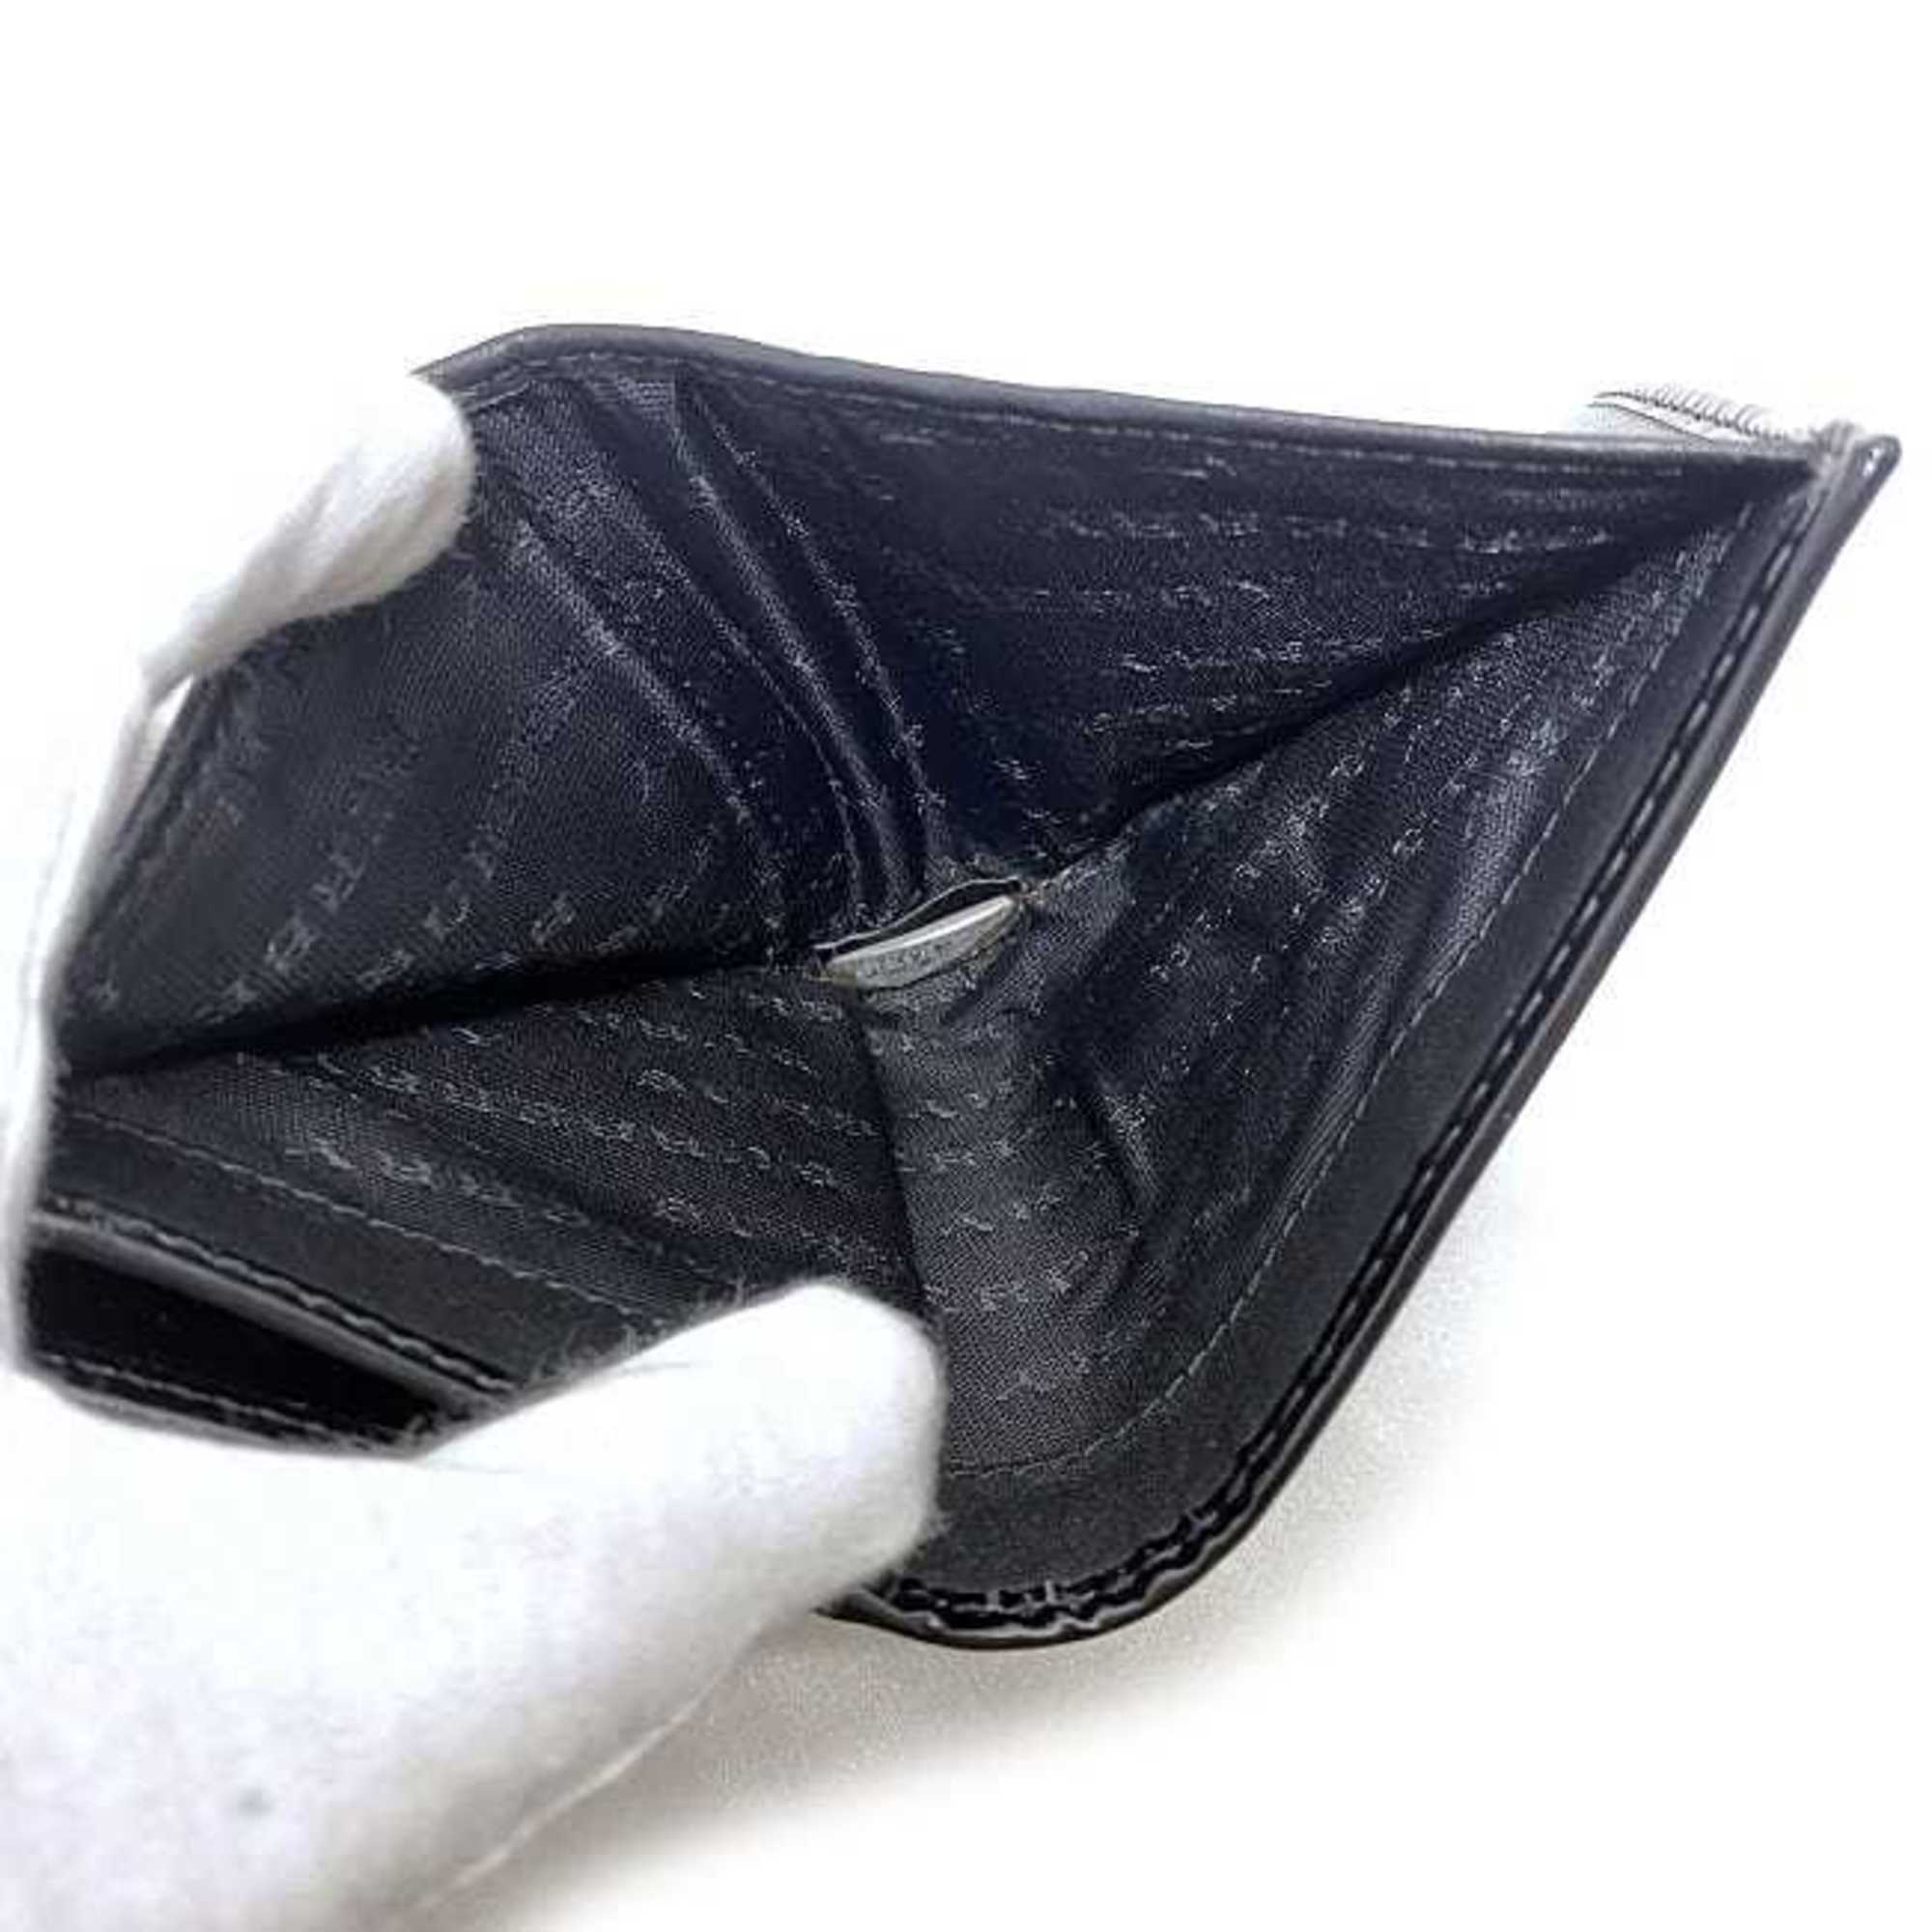 Burberry W wallet beige black check double PVC patent leather BURBERRY folio flap ladies'